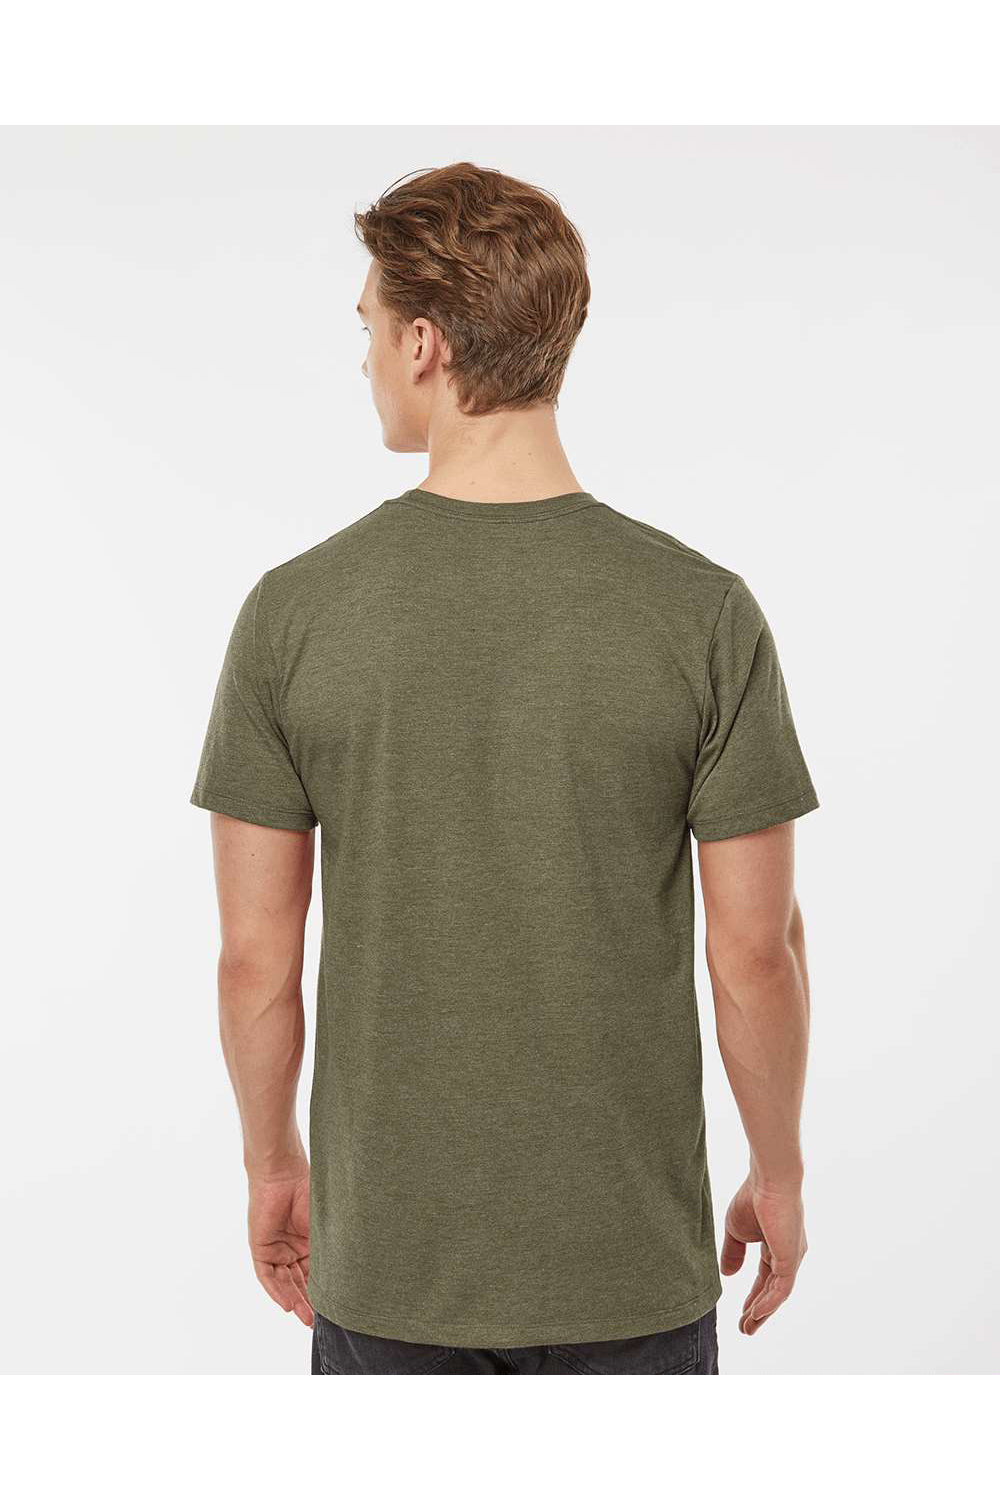 Tultex 541 Mens Premium Short Sleeve Crewneck T-Shirt Heather Olive Green Model Back